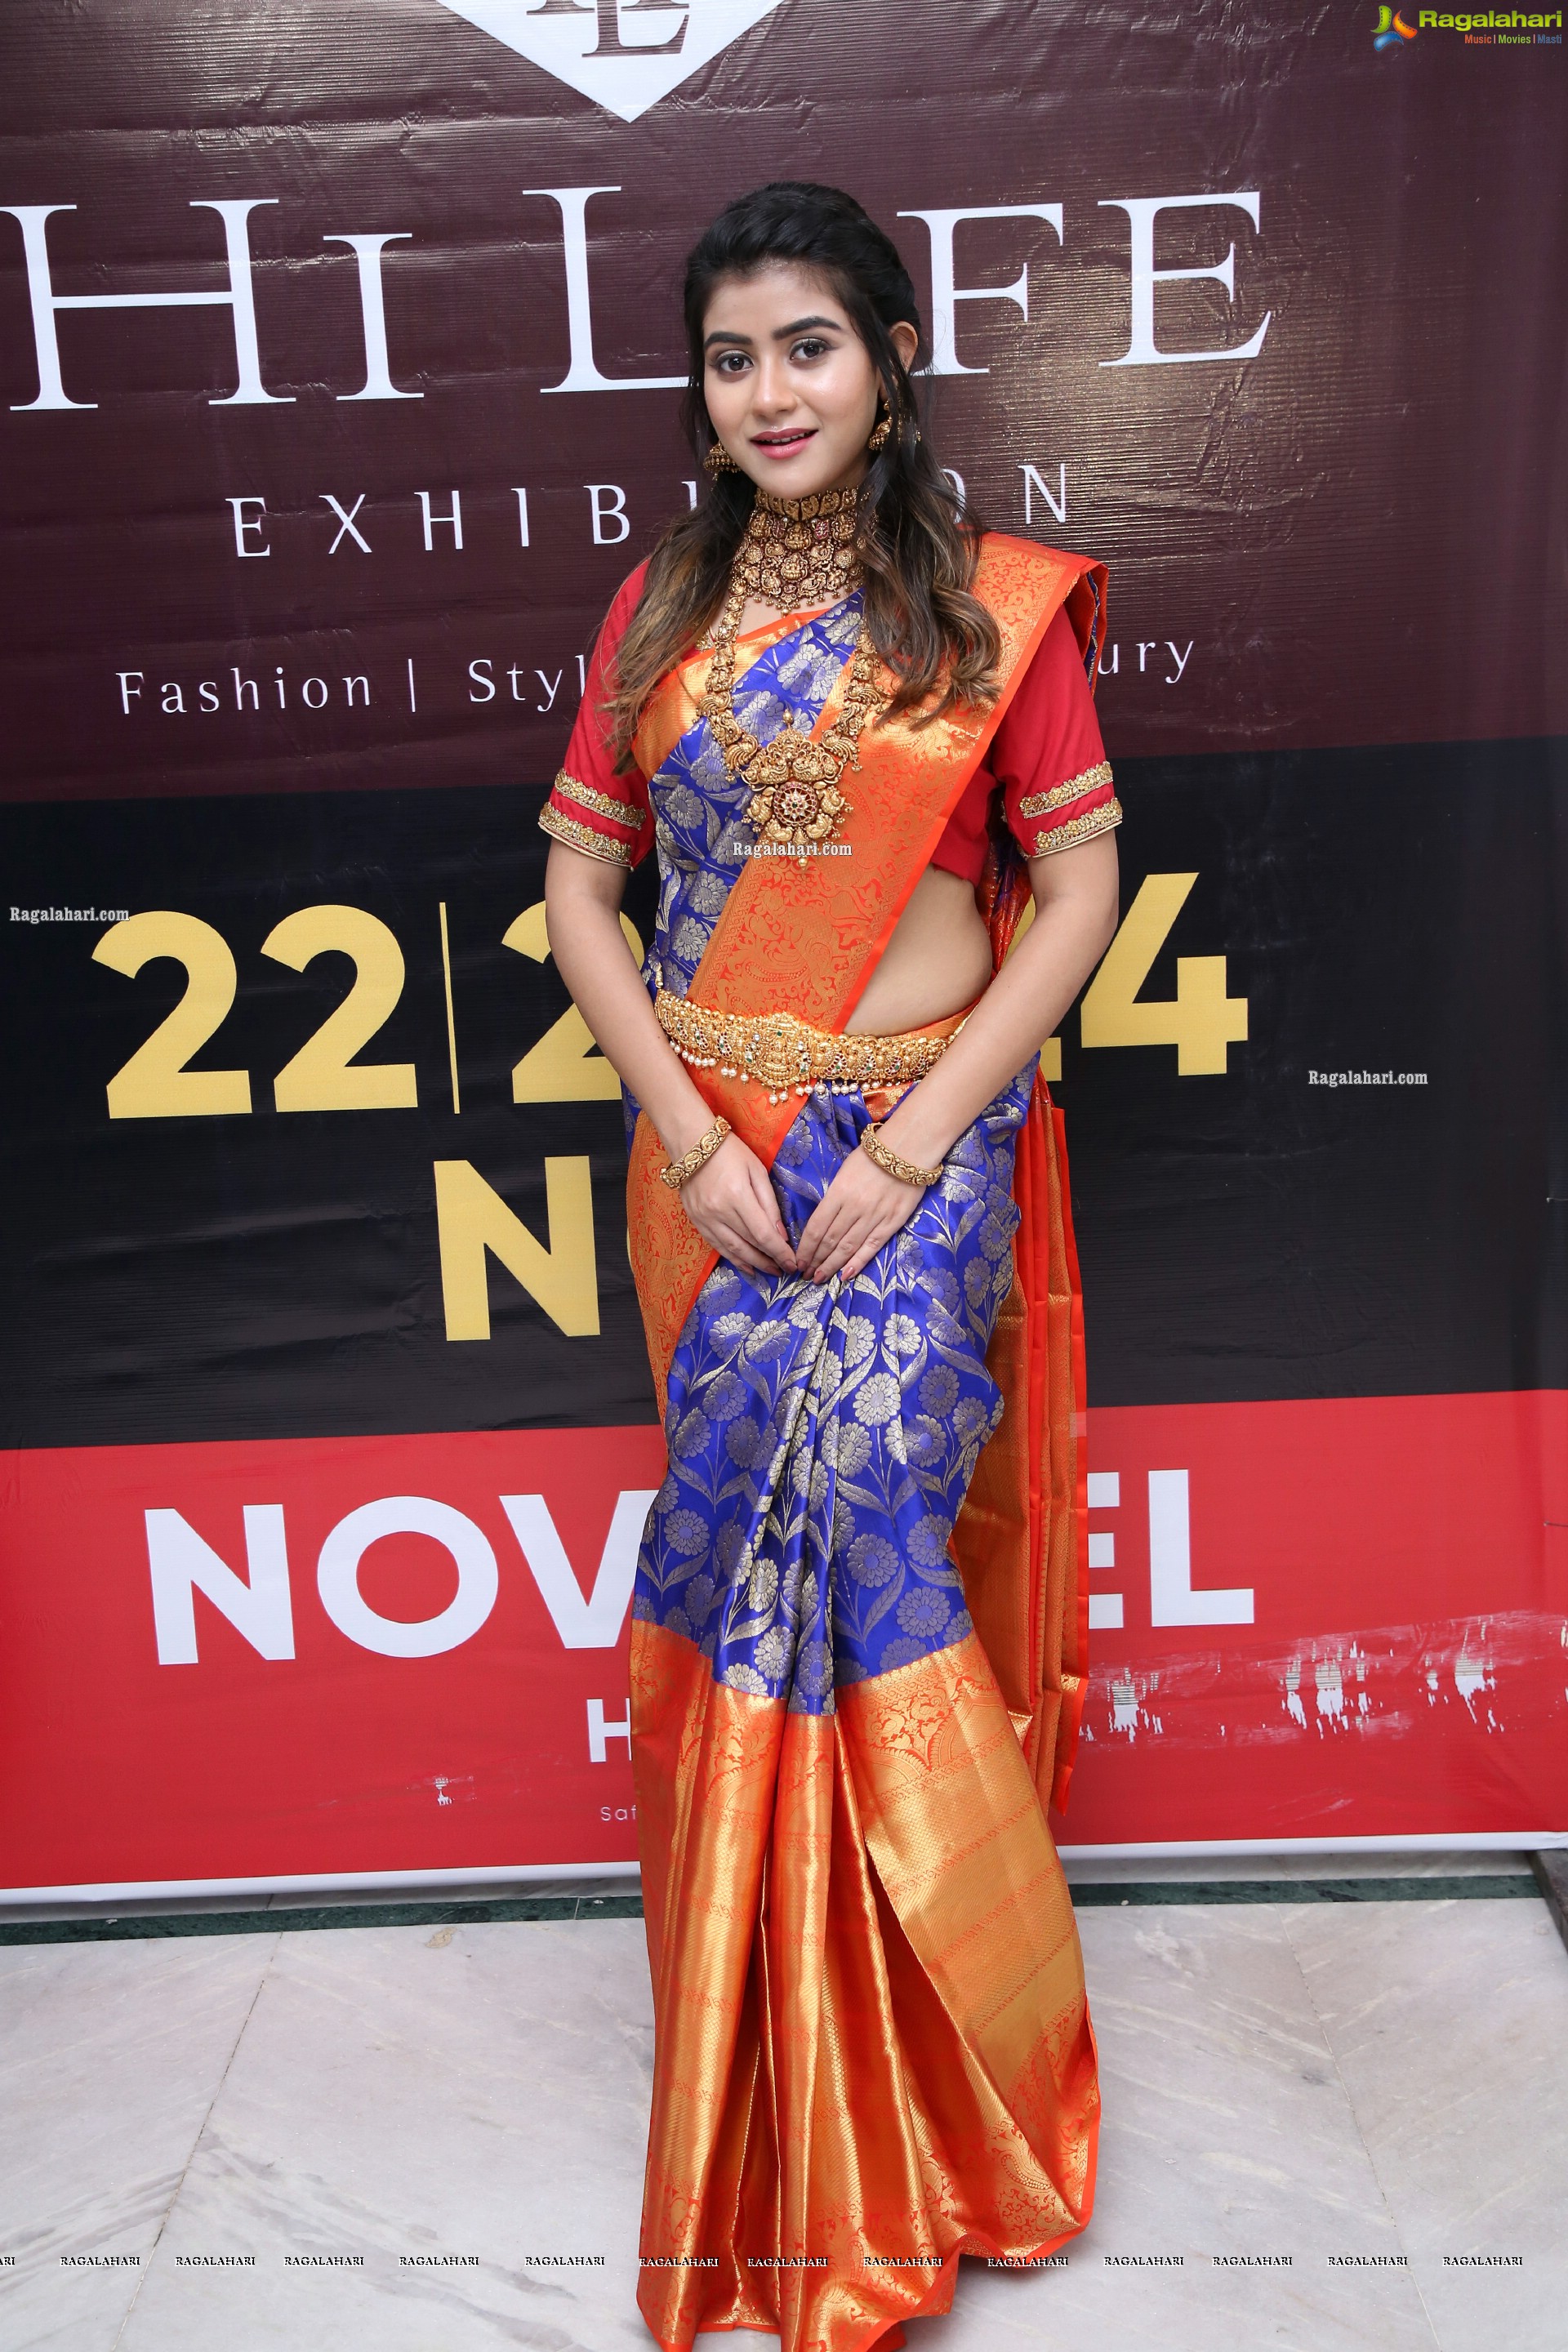 Prantika Das Showcases a Collection at Hi-Life Exhibition Curtain Raiser Event, HD Photo Gallery